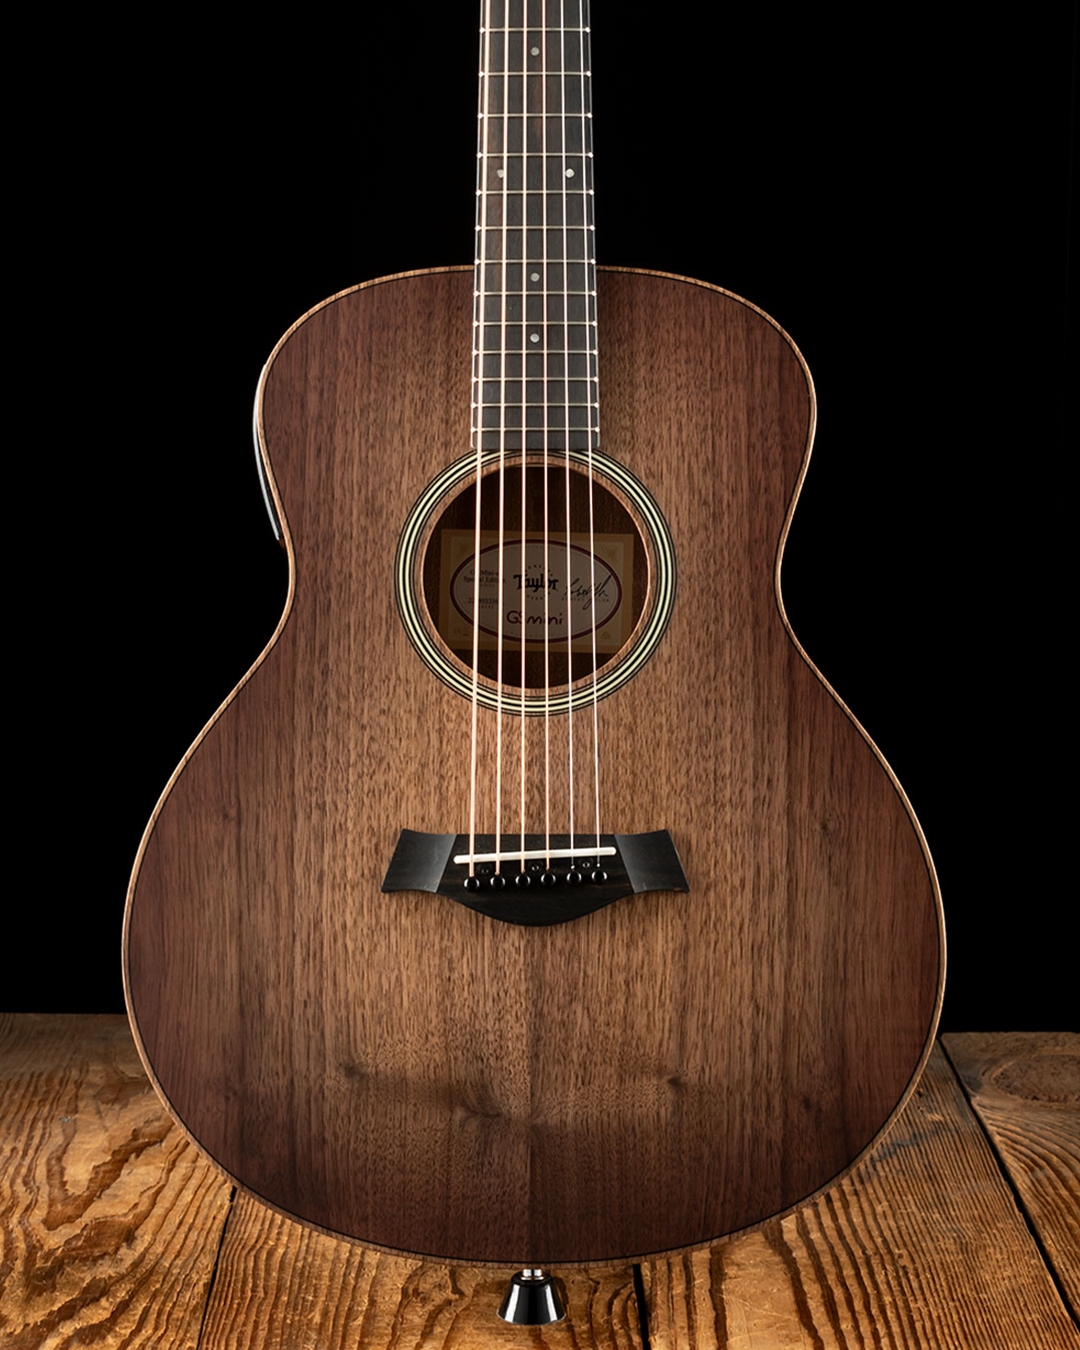 Taylor GS Mini-e Special Edition Acoustic-Electric Guitar